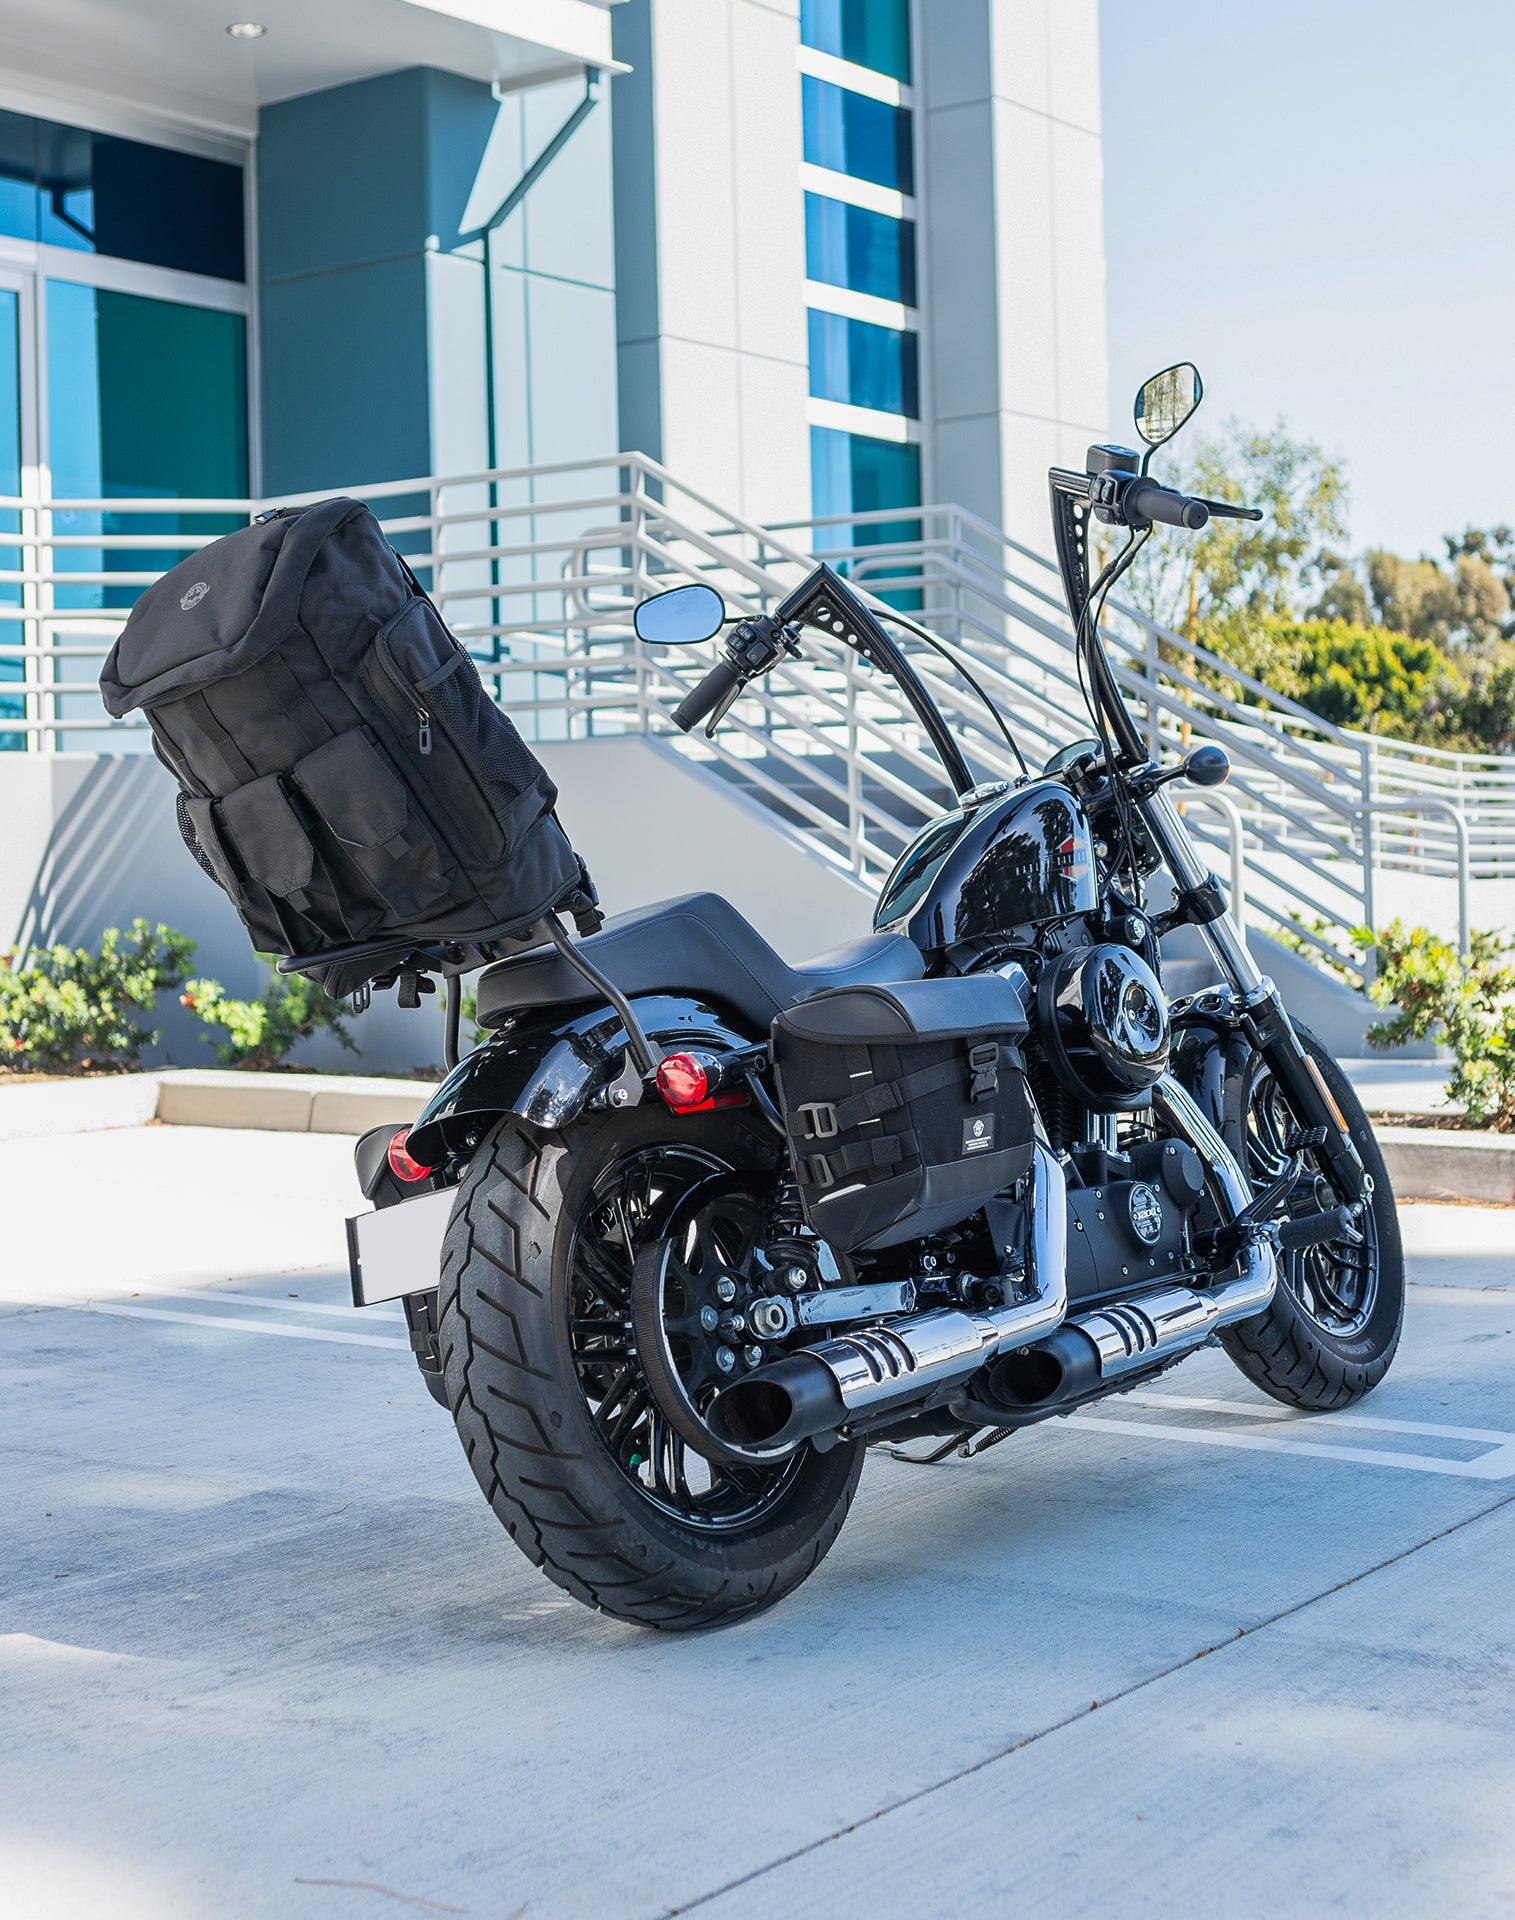 32L - Trident Large Motorcycle Sissy Bar Backpack for Harley Davidson